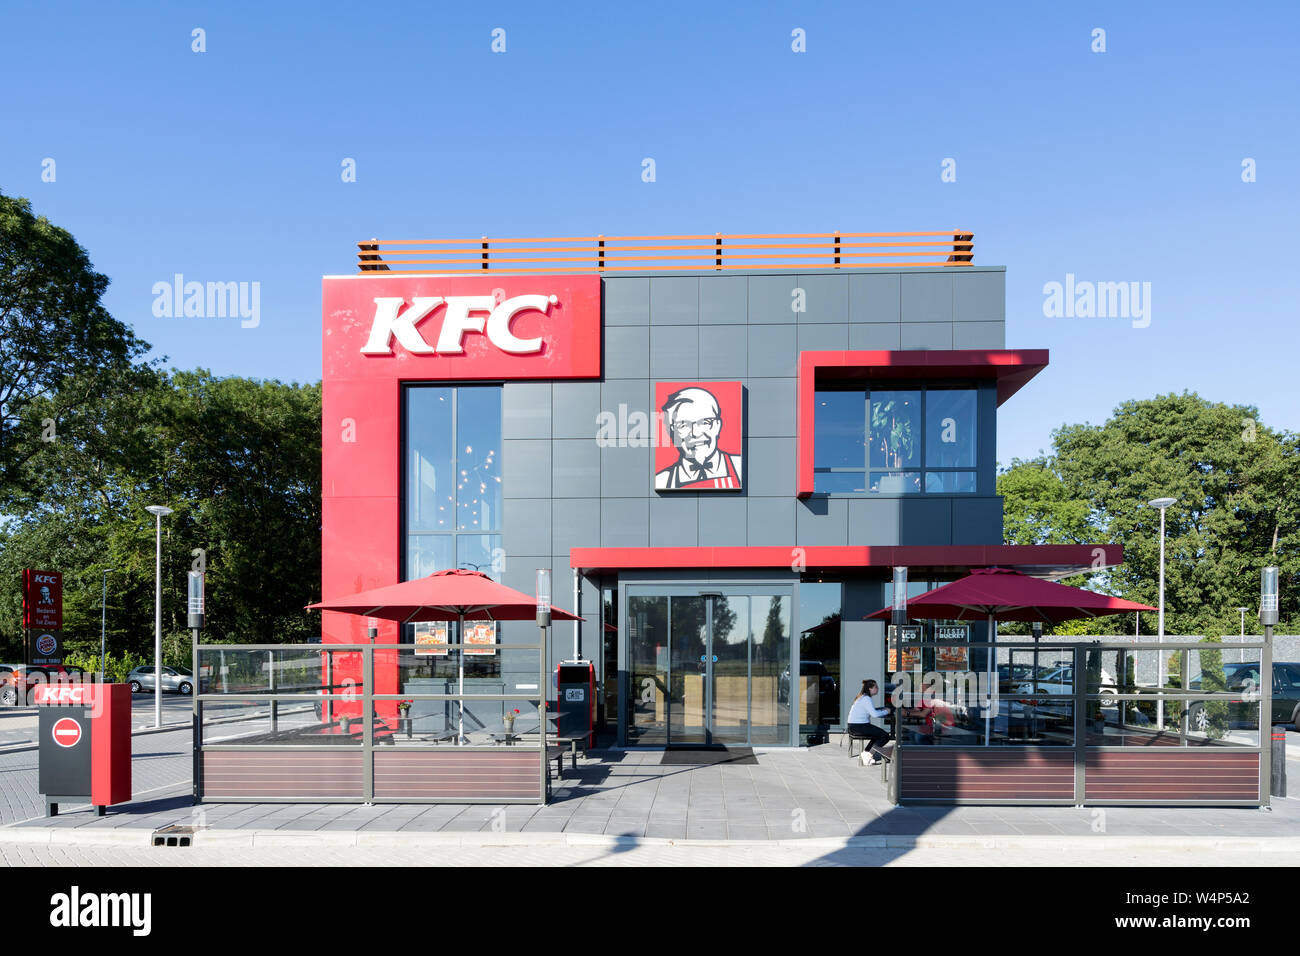 KFC fast food restaurant in Spijkenisse, The Netherlands. Kentucky Fried Chicken (KFC) is the world's second largest restaurant chain. Stock Photo